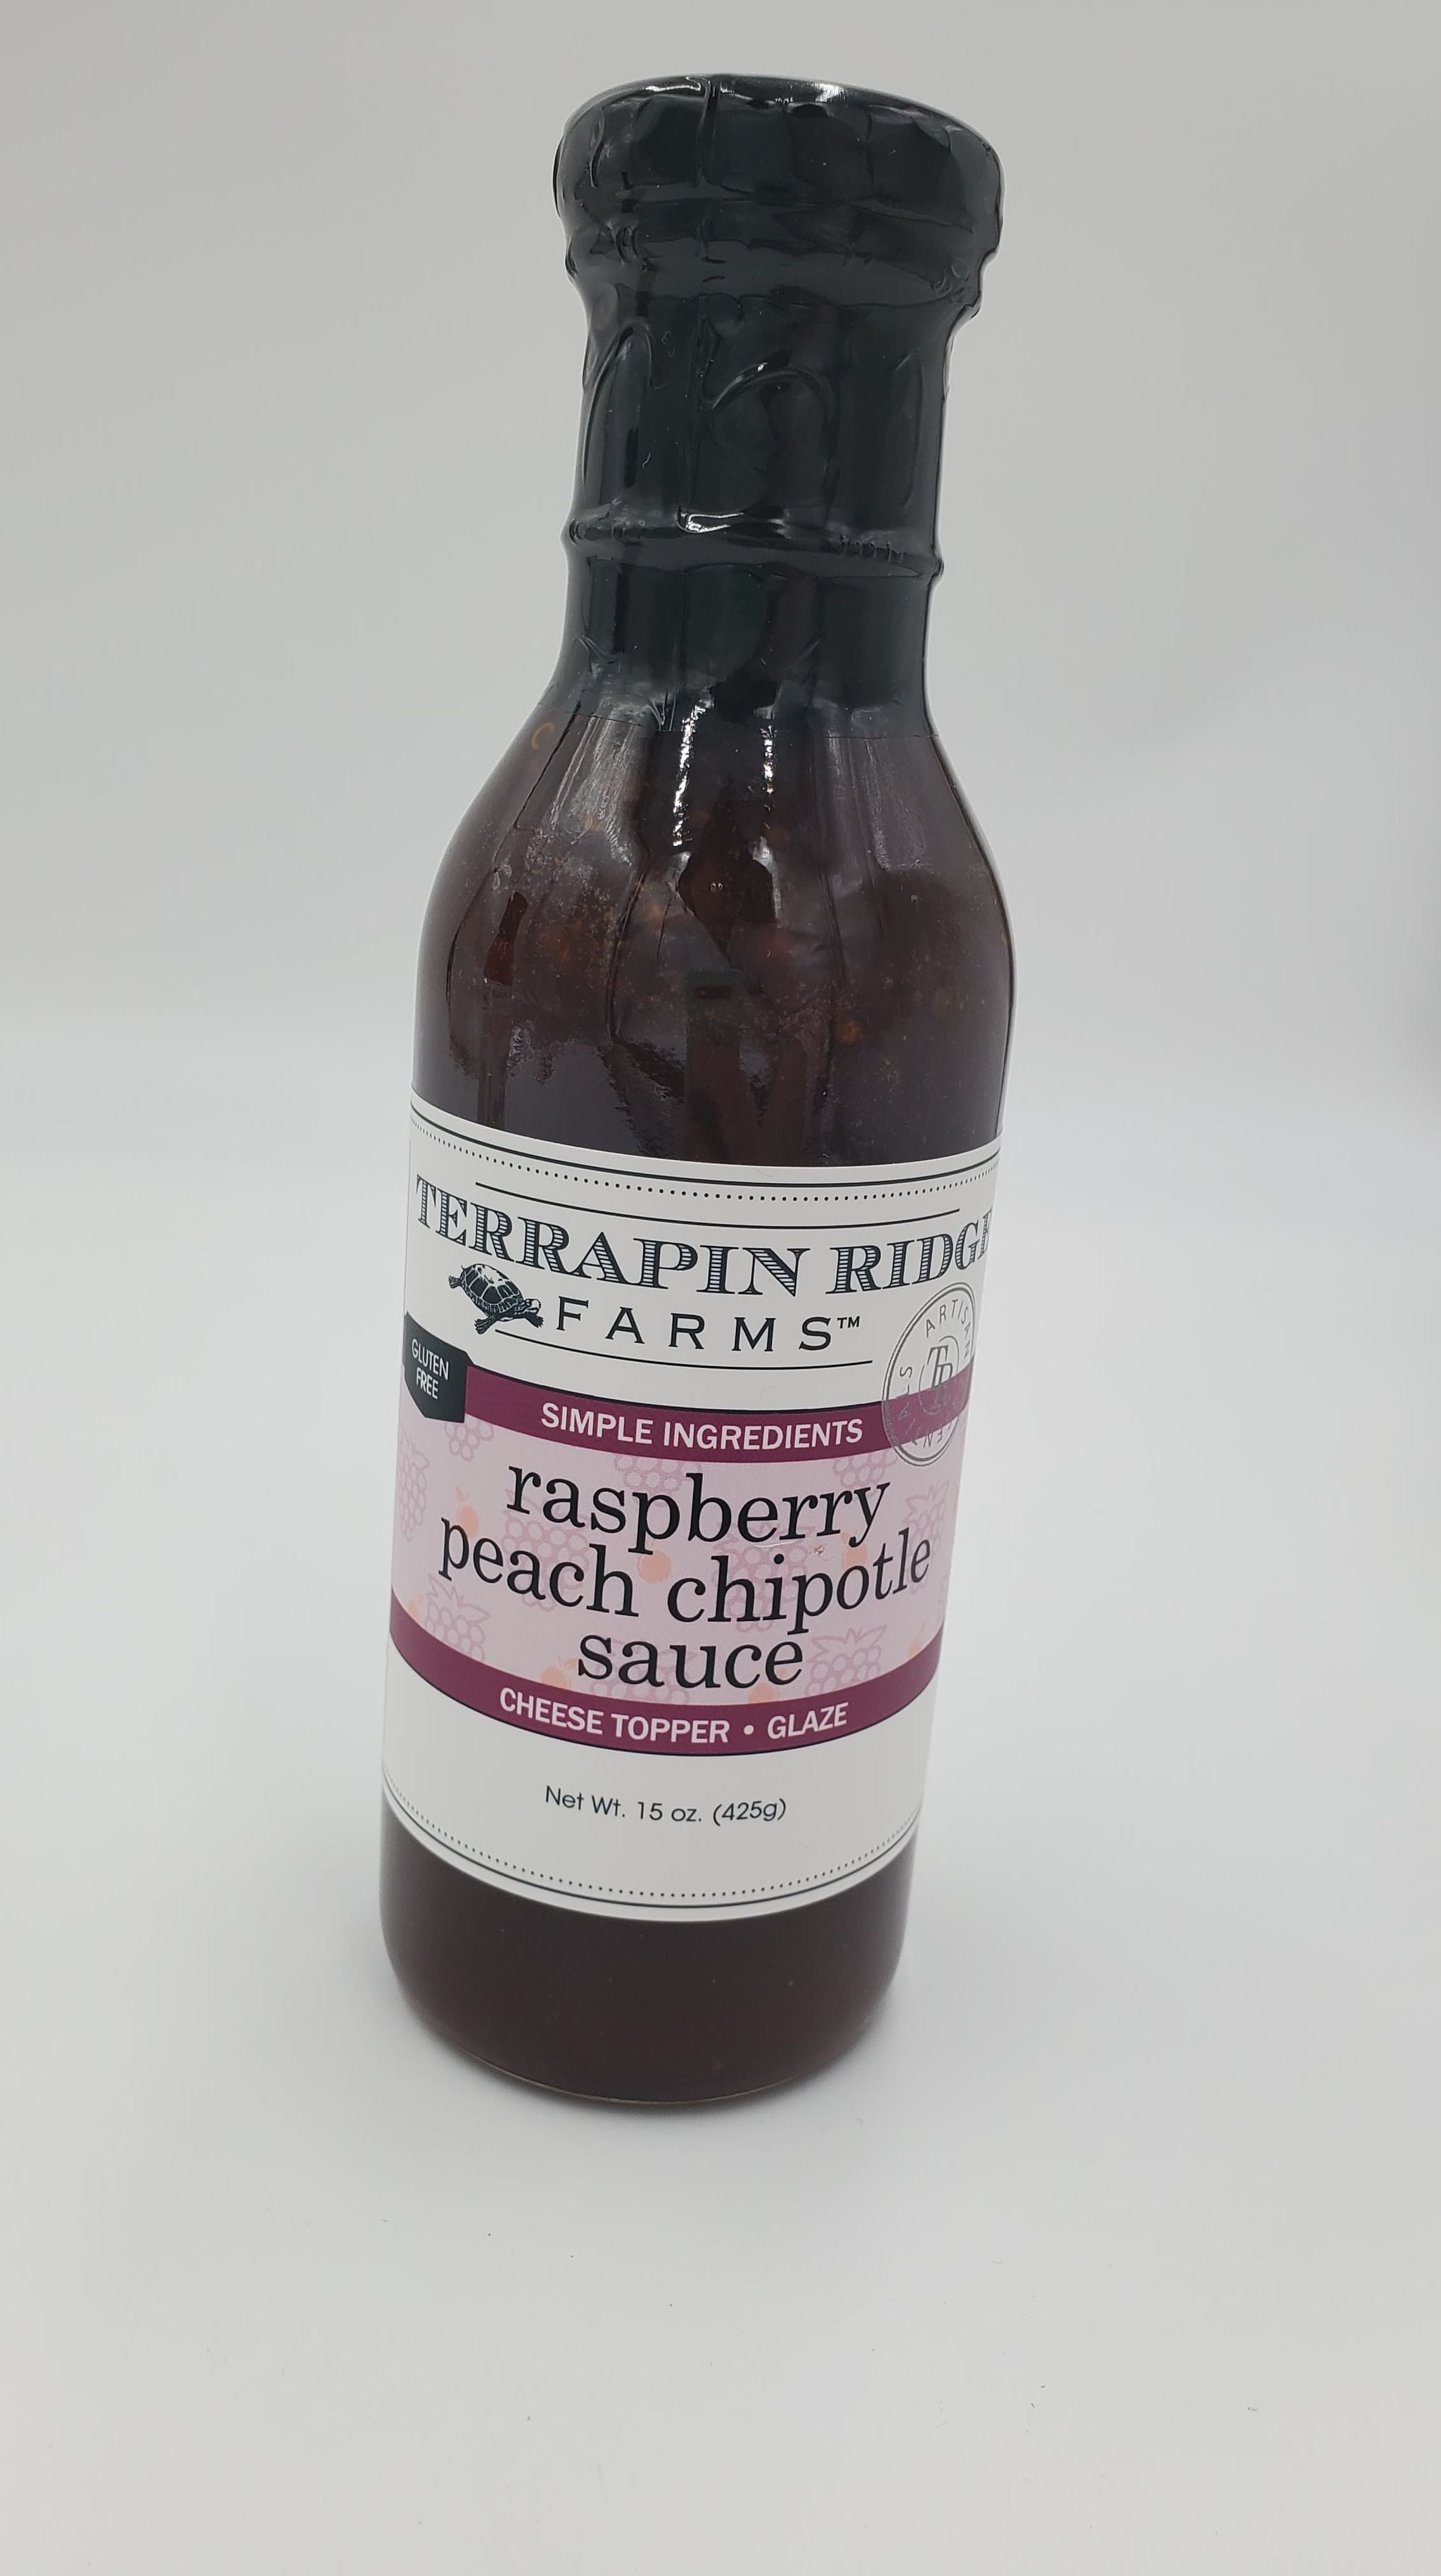 Terrapin Ridge farms Raspberry Peach Chipotle Sauce - Olive Oil Etcetera 